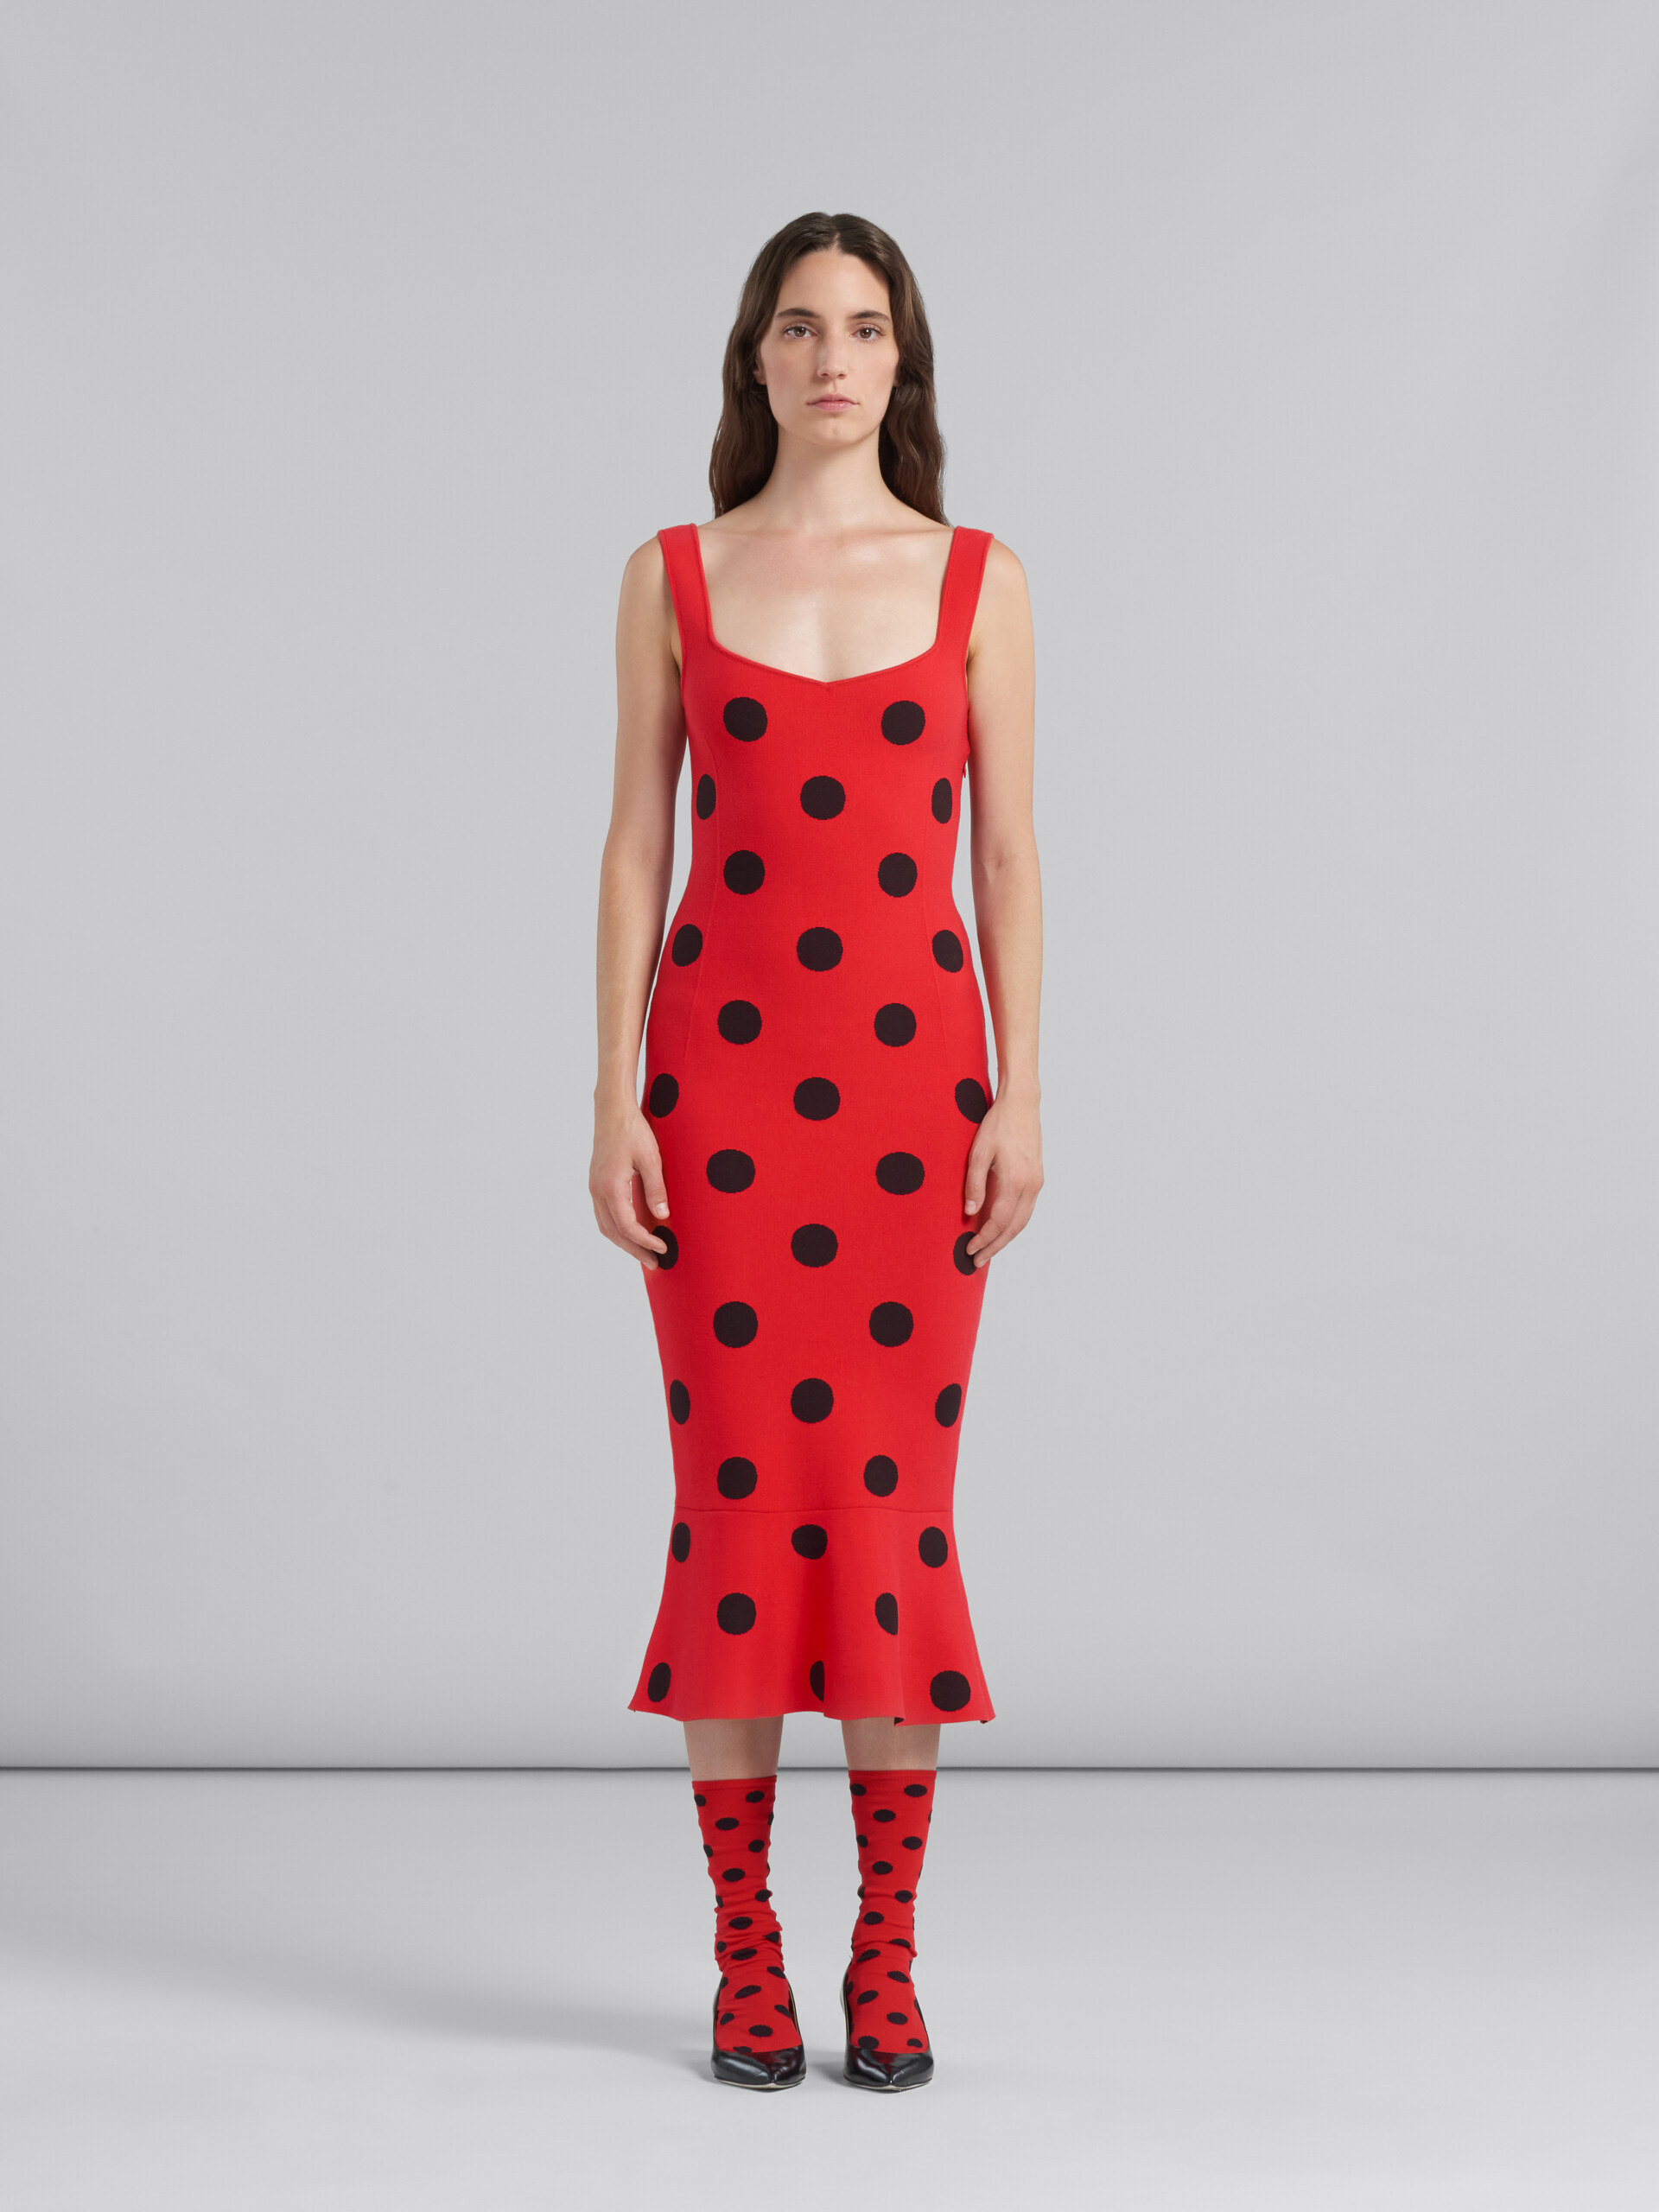 Red viscose sheath dress with polka dots